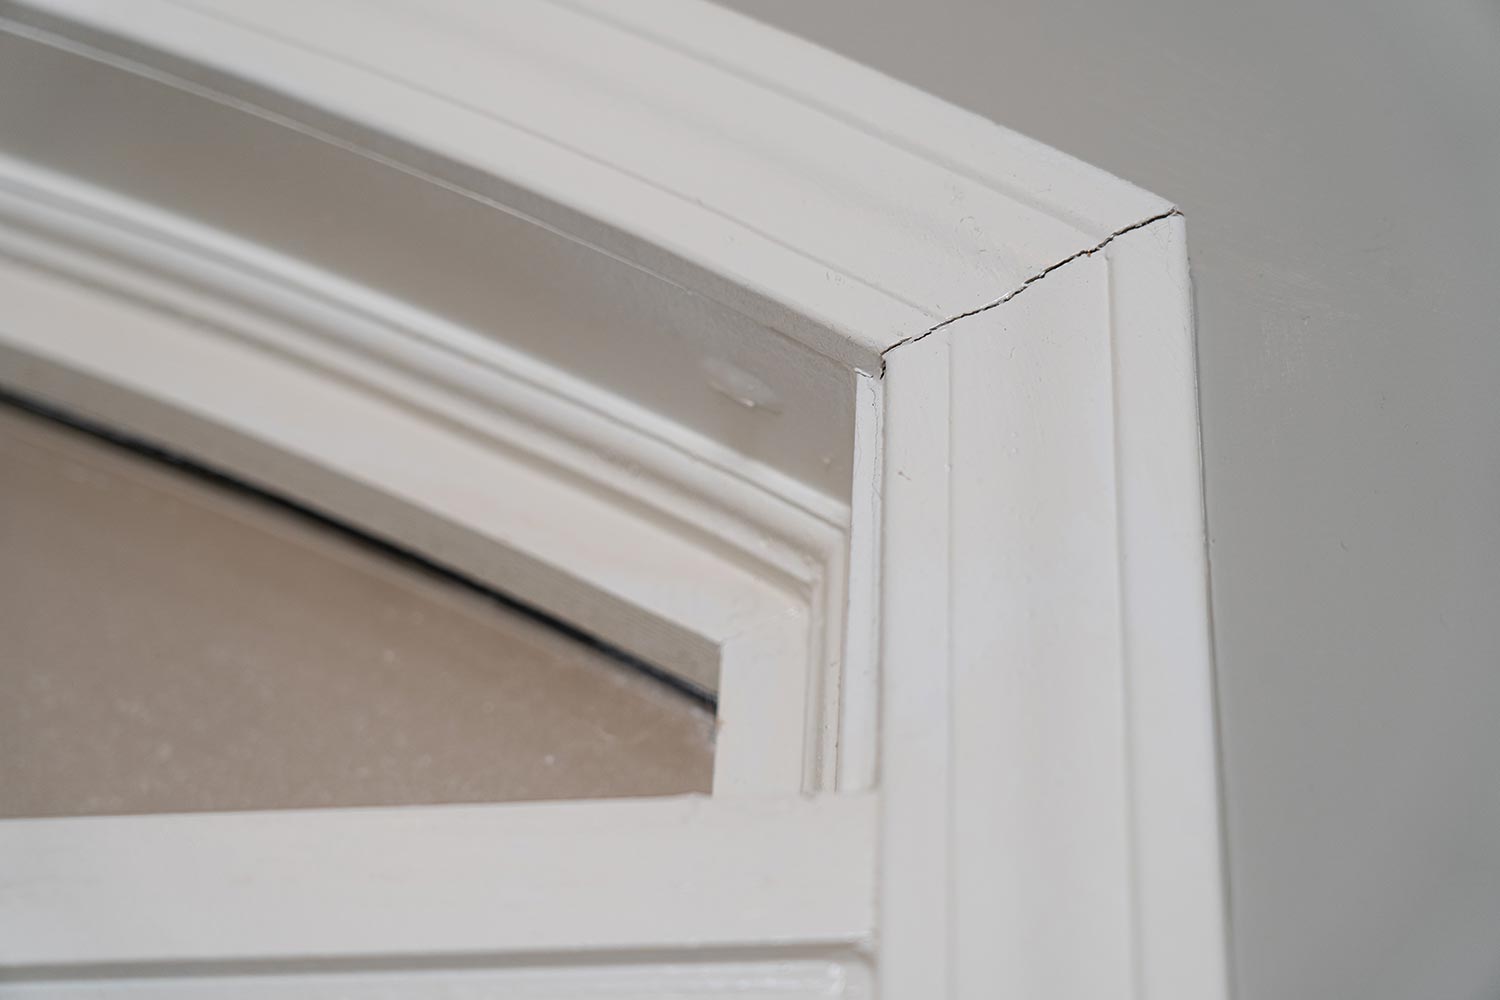 Gaps in trim molding around a door frame create unsightly cracks